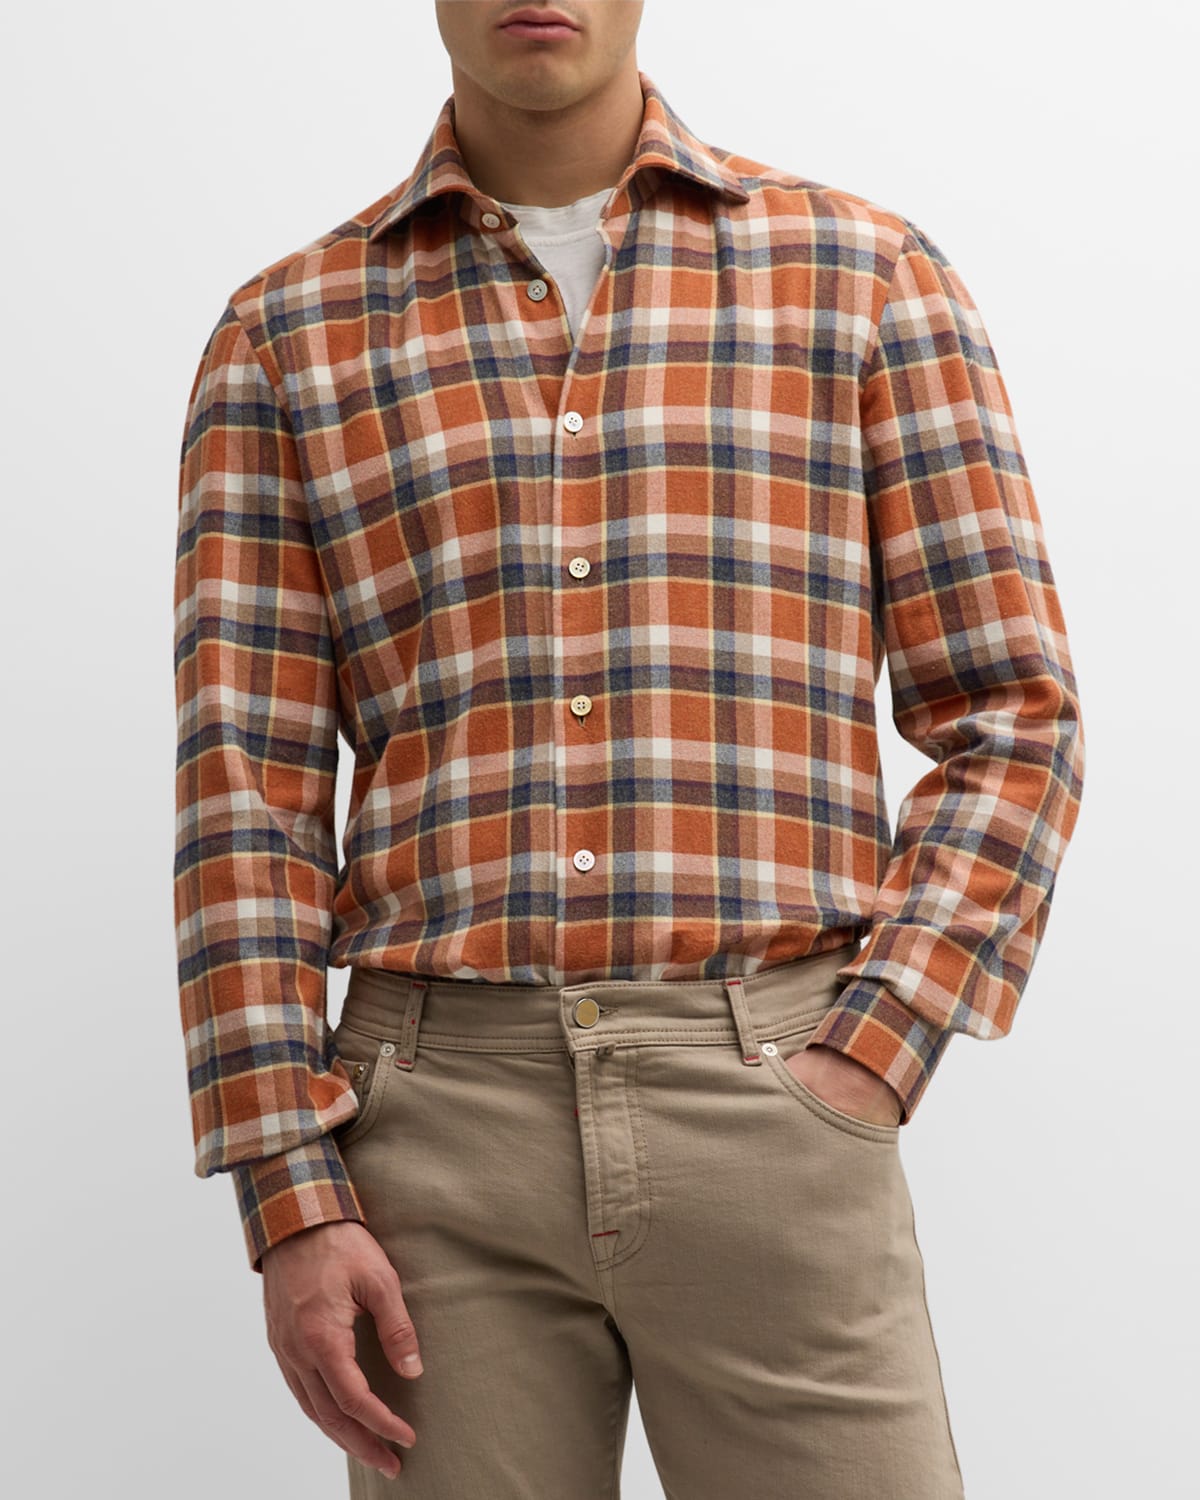 Kiton Men's Cotton Plaid Sport Shirt In Orange Multi